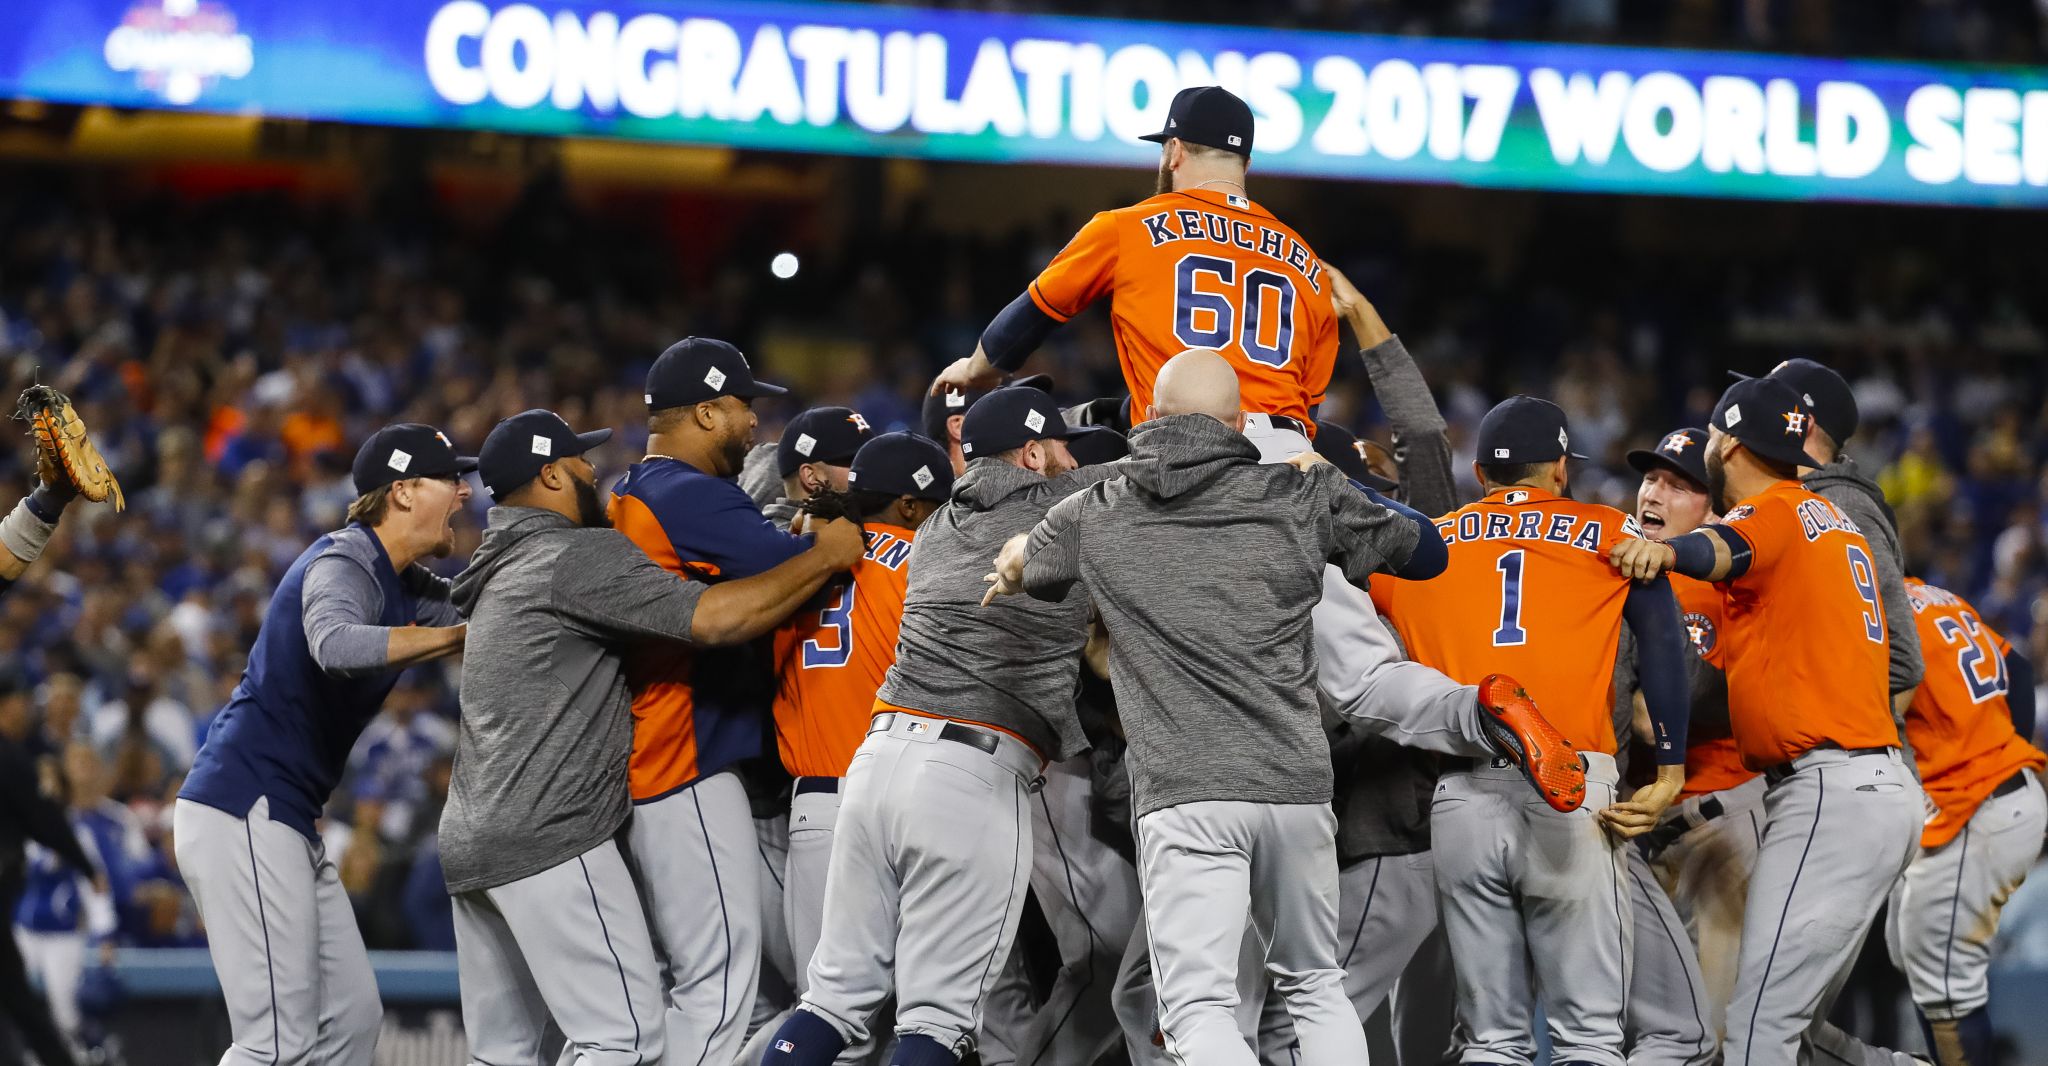 Congrats Astros, Houston Astros, retail, World Series